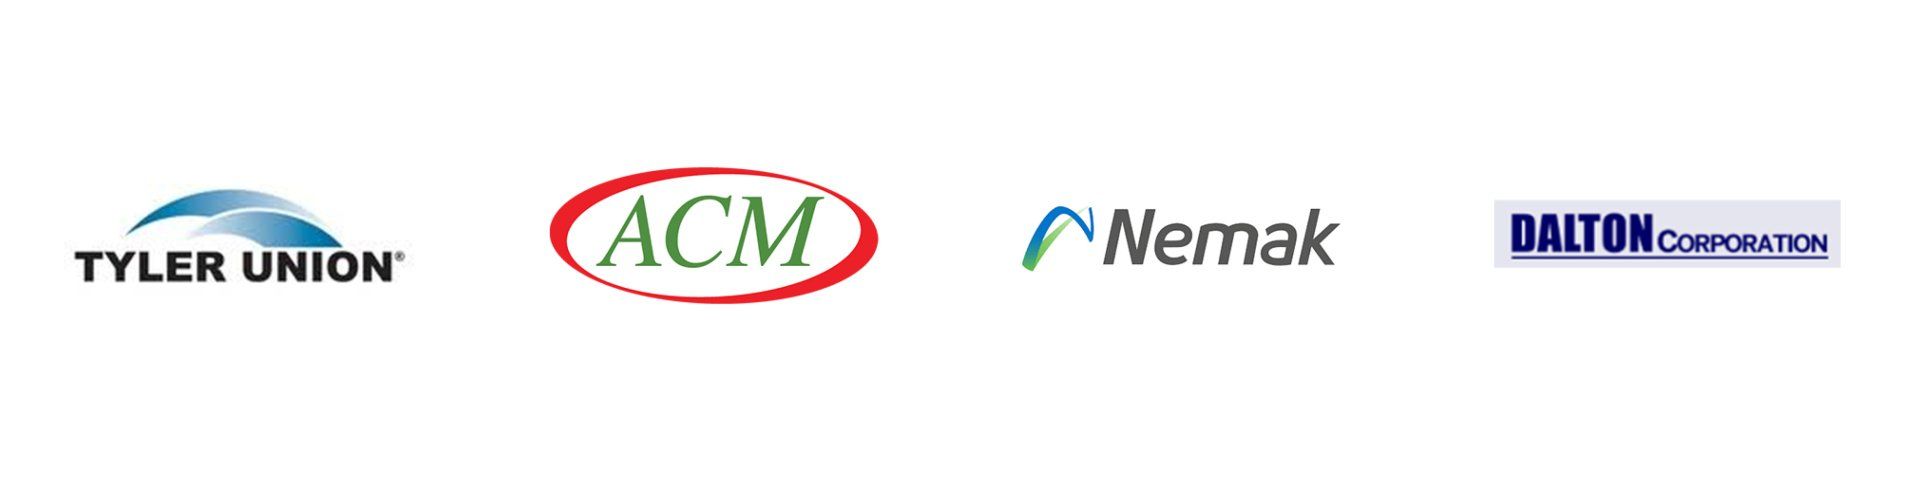 Tyler Union, ACM, Nemak and Dalton Corporation Logos